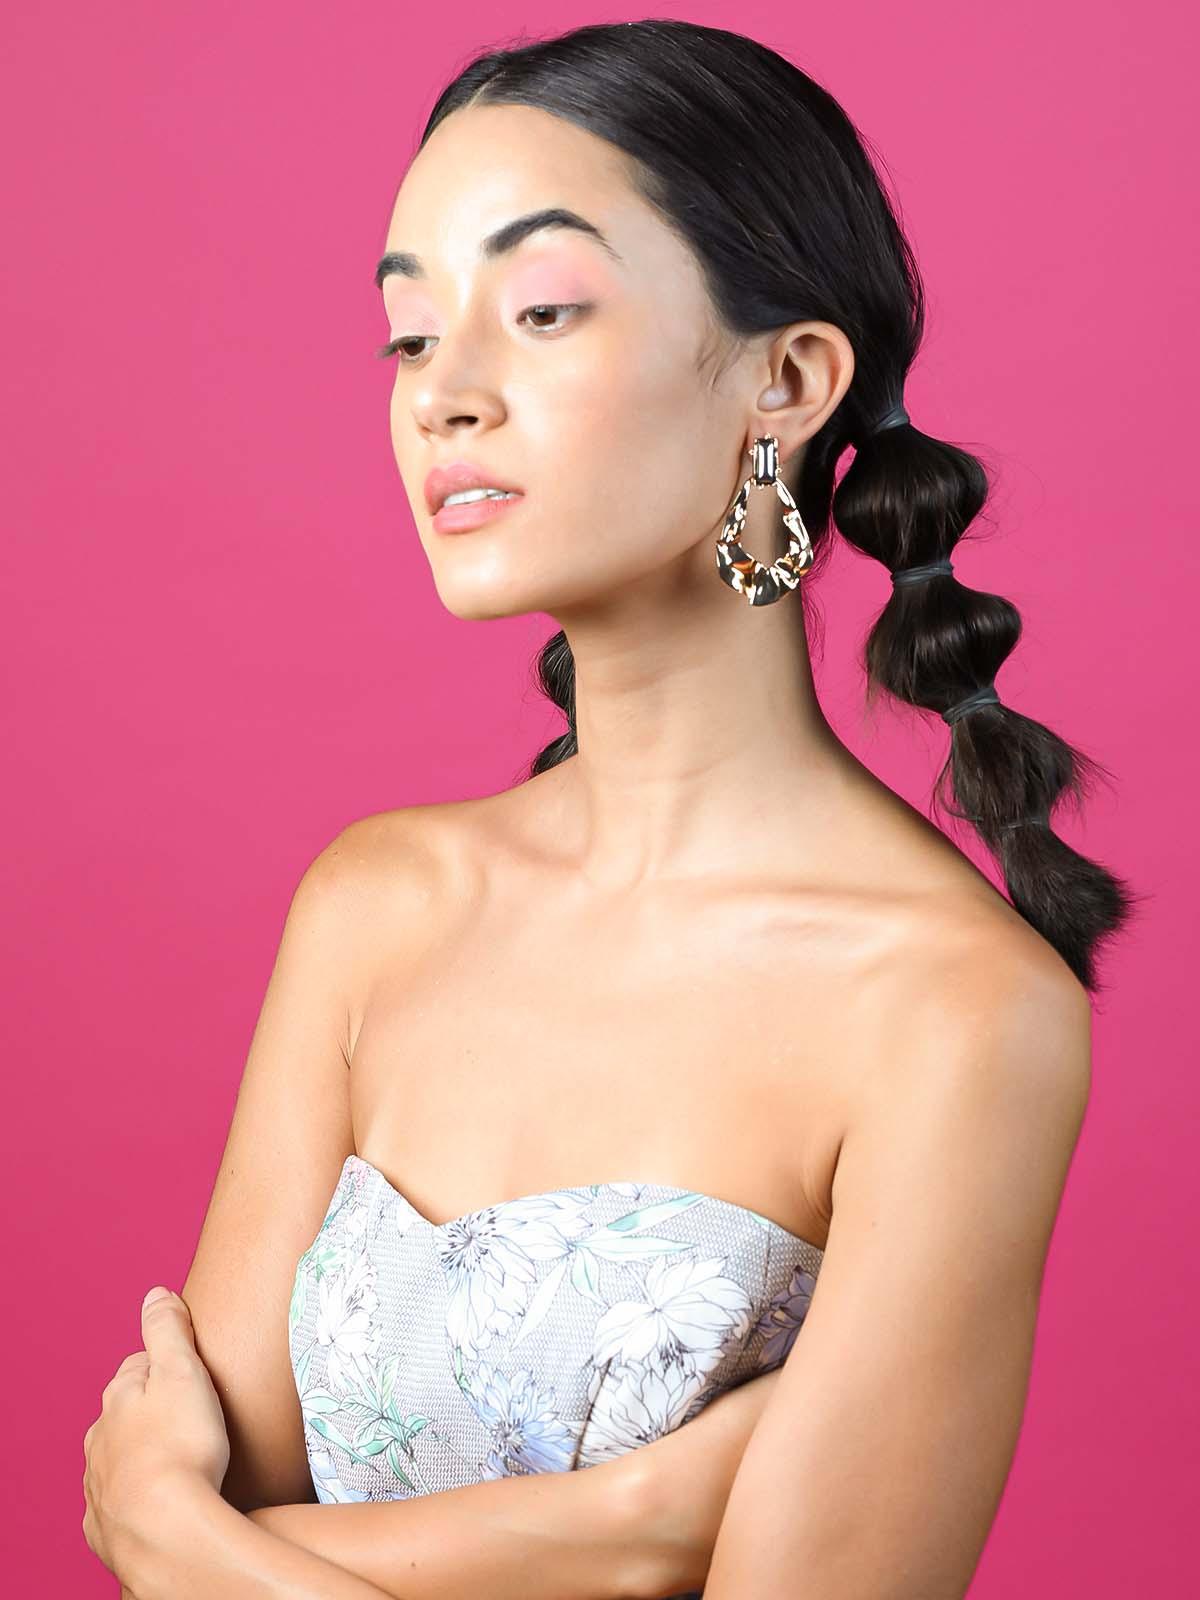 Women's Exquisite Gold Textured Drop Earrings - Odette